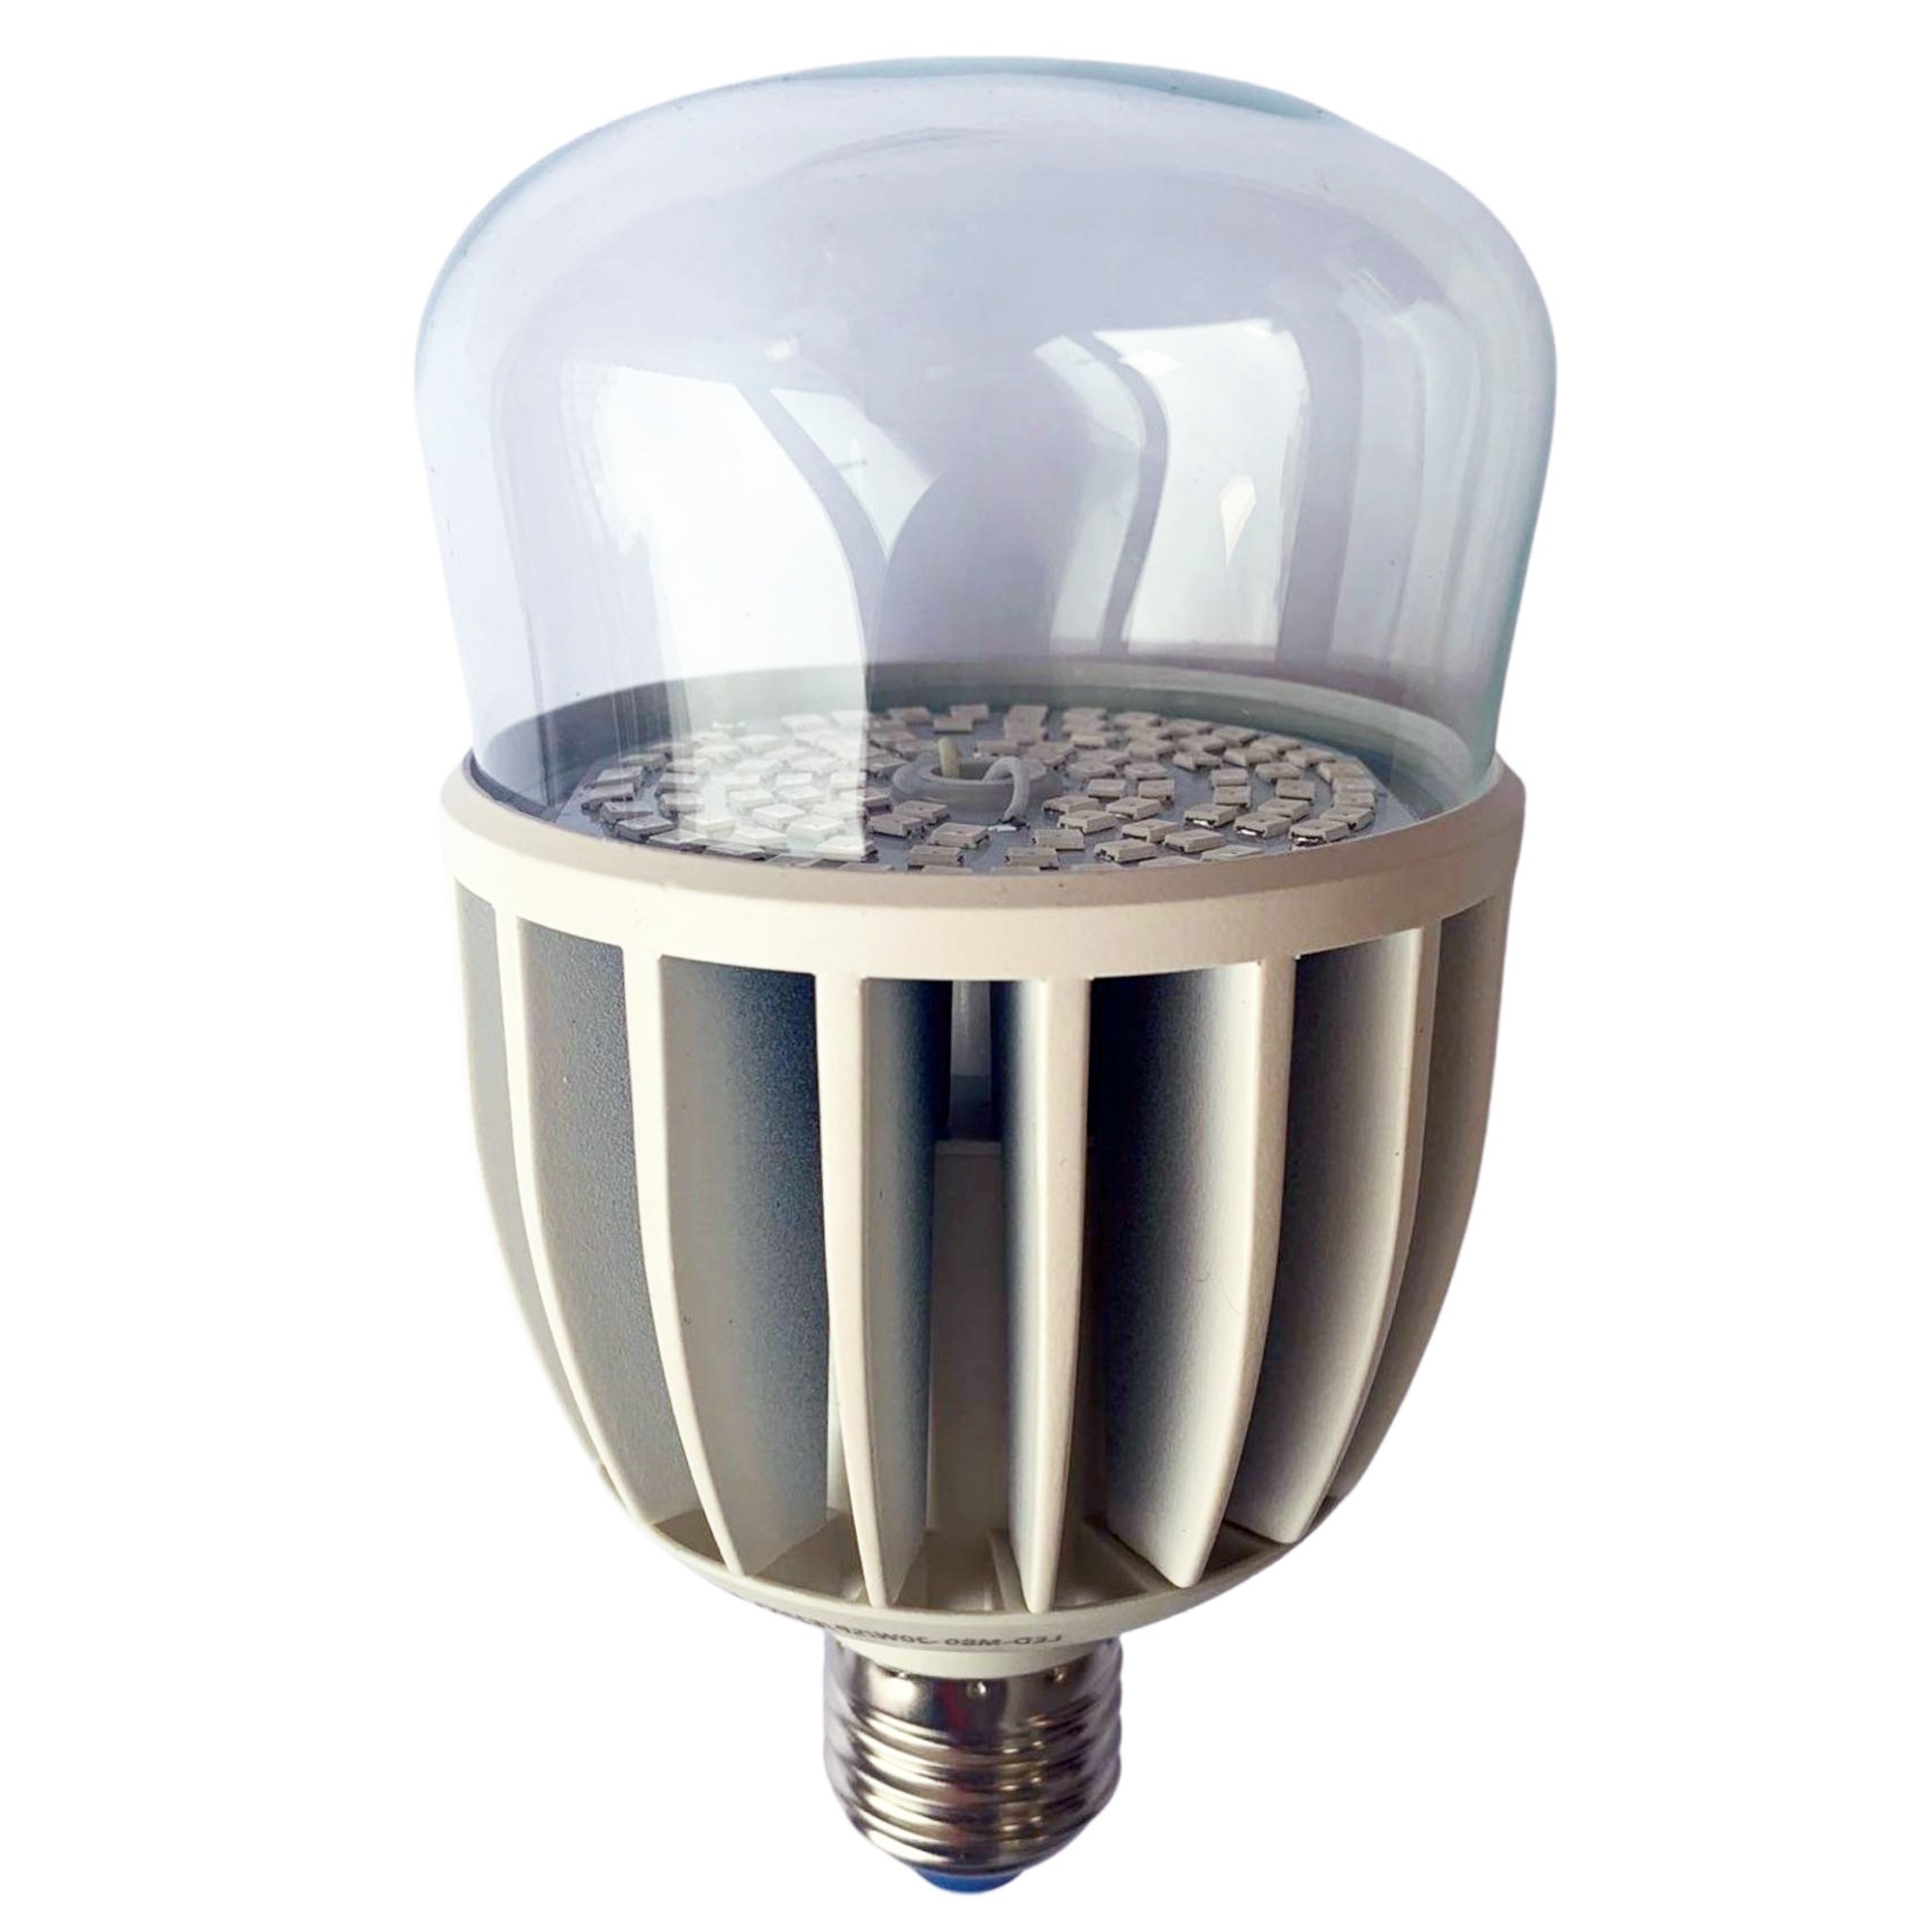 LED-M80-20W-SP-E27-CL ALS55WH Лампа светодиодная для растений. IP54. Форма M. прозрачная колба. Материал корпуса алюминий. Упаковка картон.